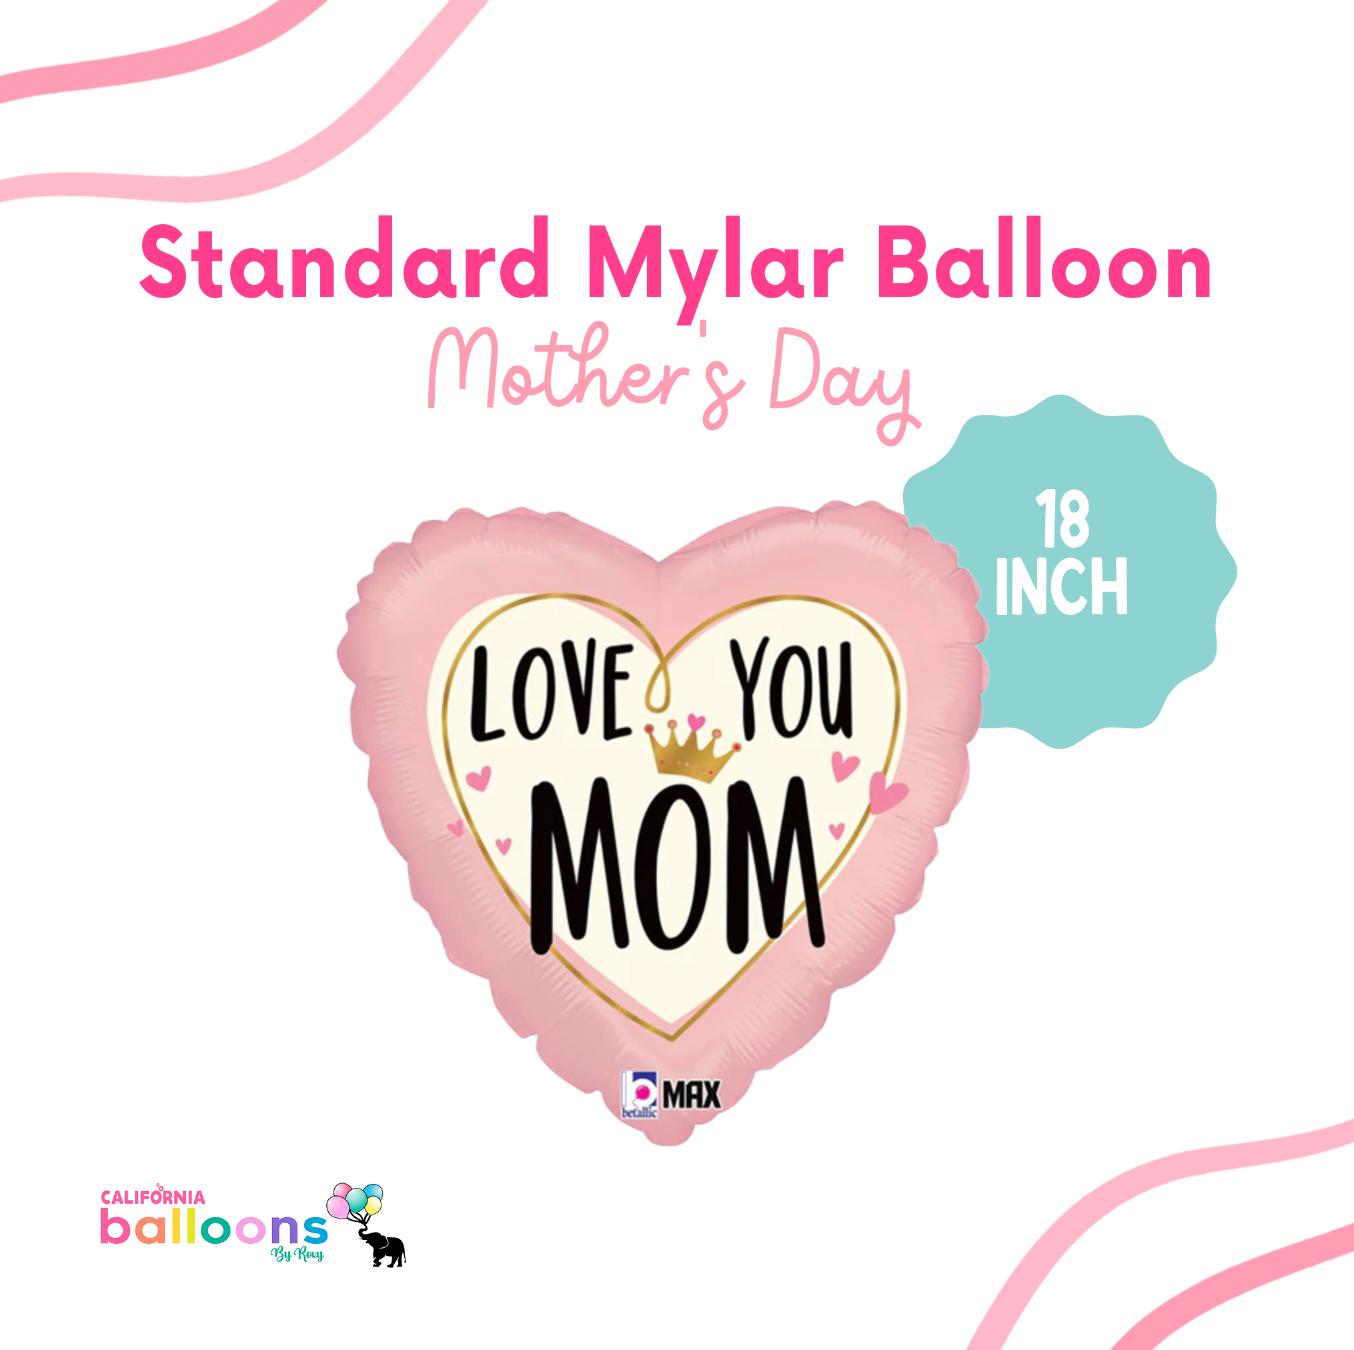 "Love You MOM" Crown - heart Shape Mylar - 18 INCH